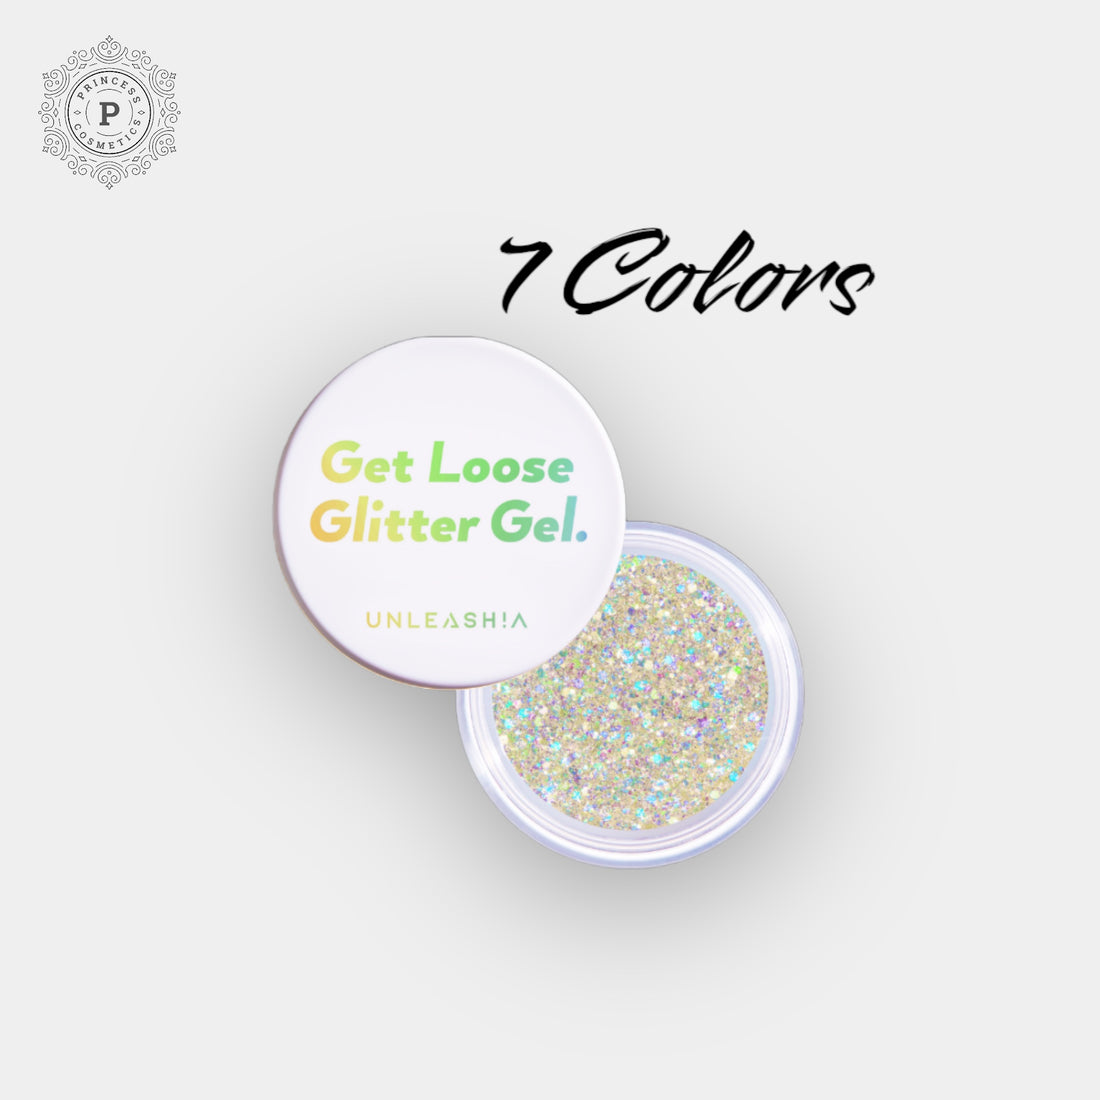 UNLEASHIA - 7 Get Loose Glitter Gels